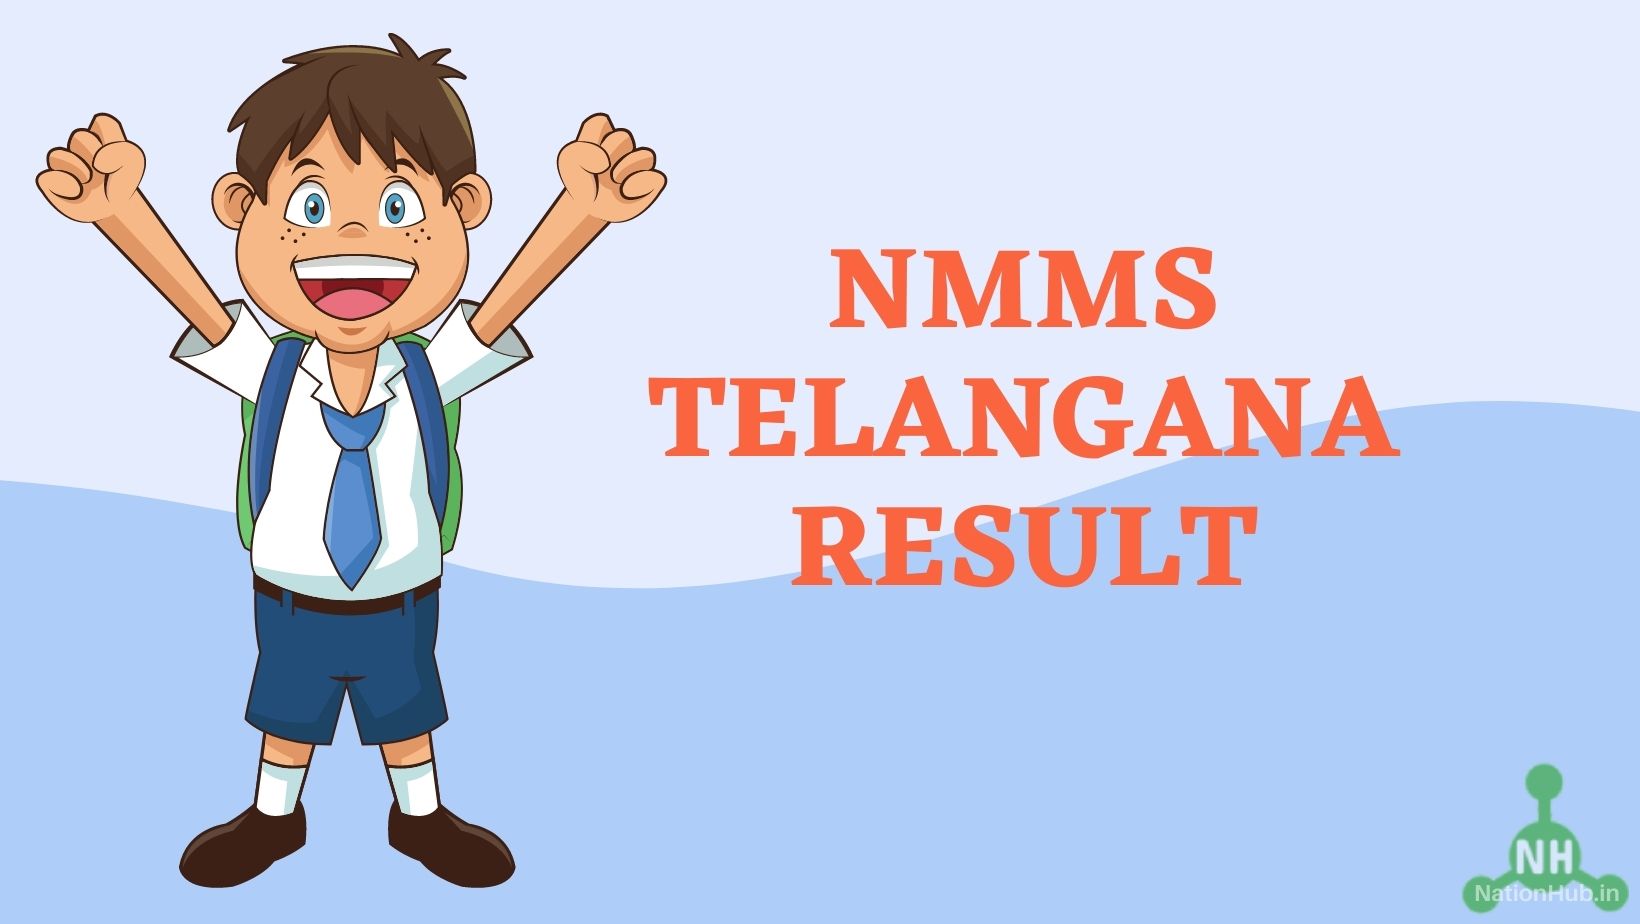 NMMS Telangana Result Featured Image